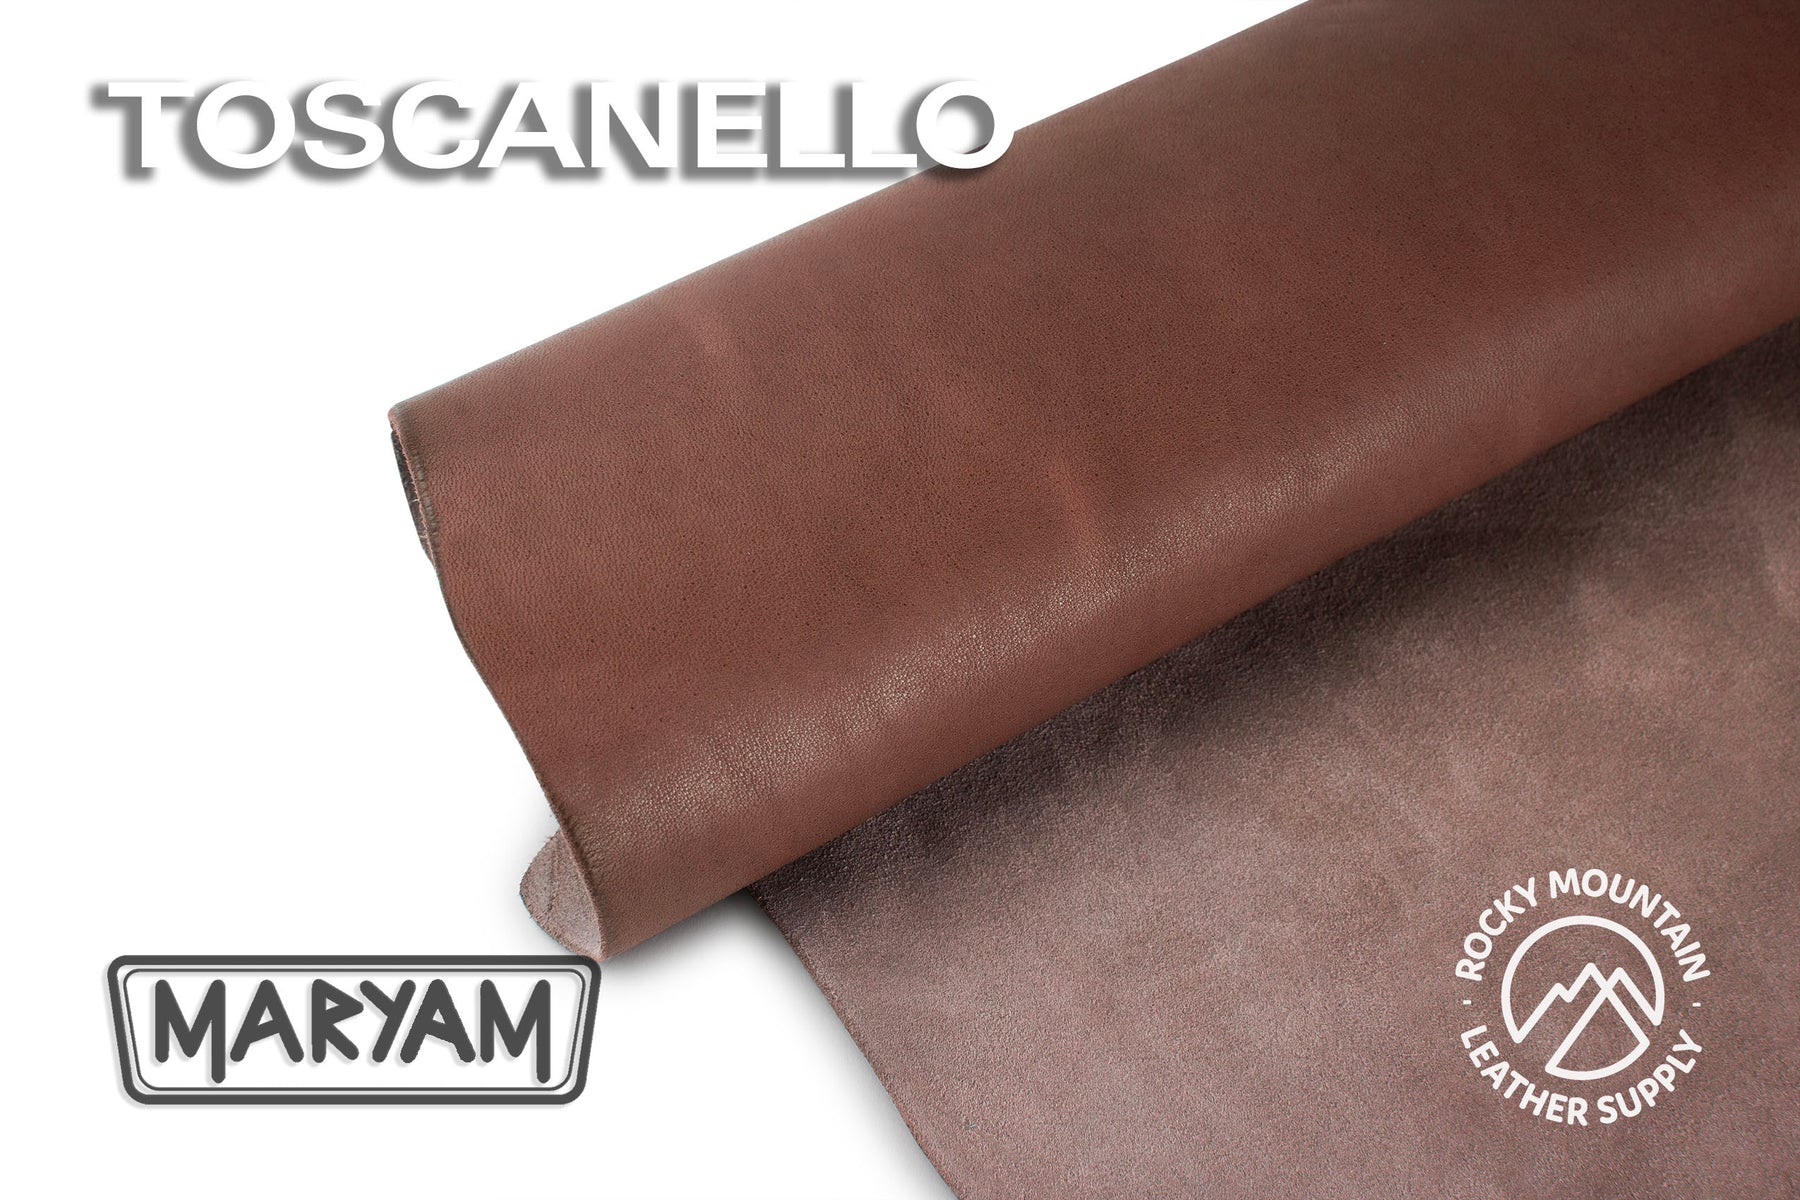 Maryam 🇮🇹 - Wash - Veg Tanned Premium Horse Front Leather (SAMPLES)